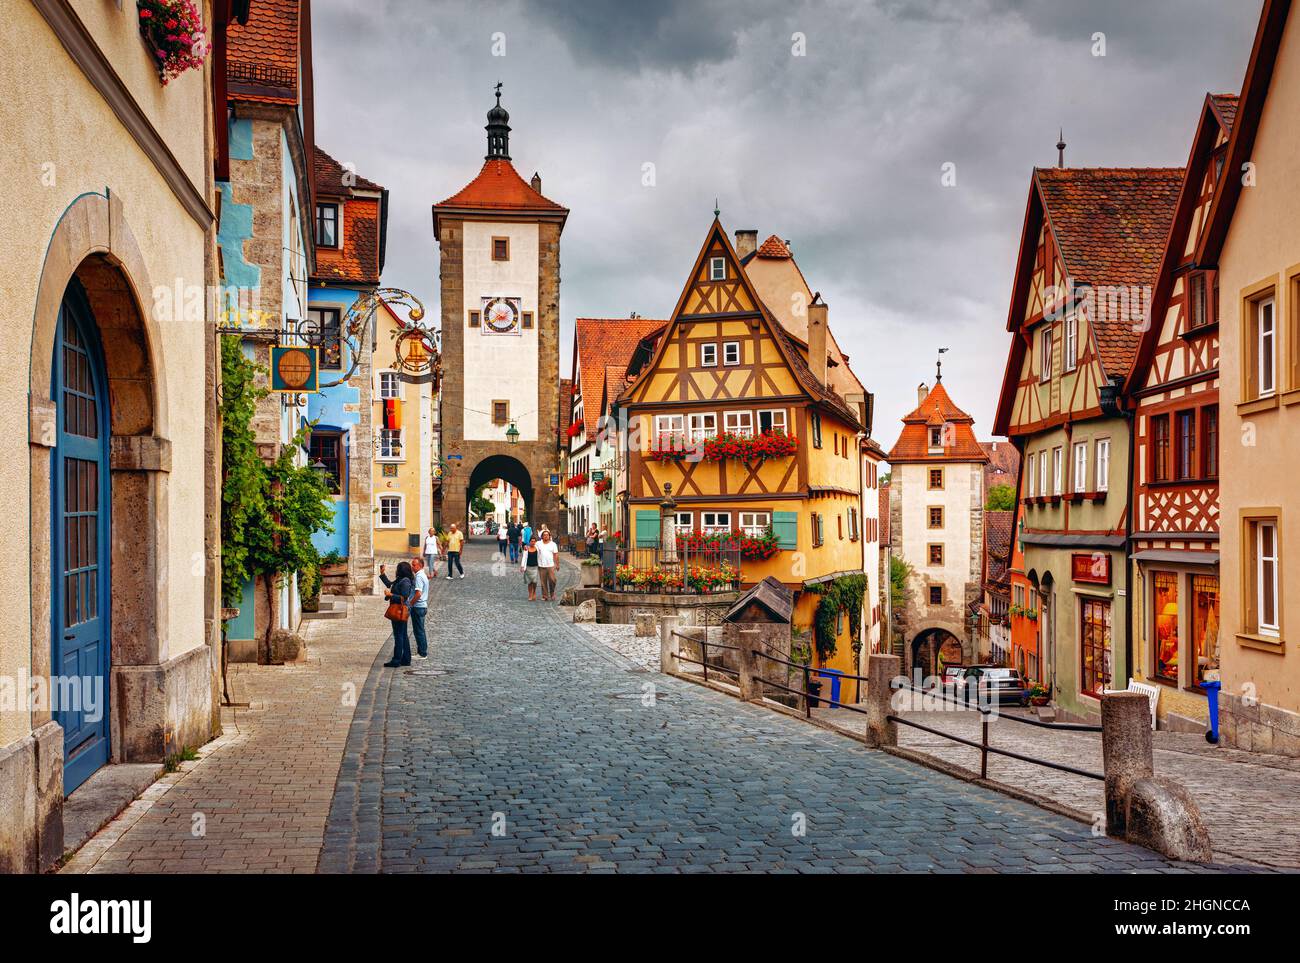 Germania, Ansbach - Città medievale Rothenburg ob der Tauber - Plönlein con Kobolzeller Steige e Spitalgasse Foto Stock